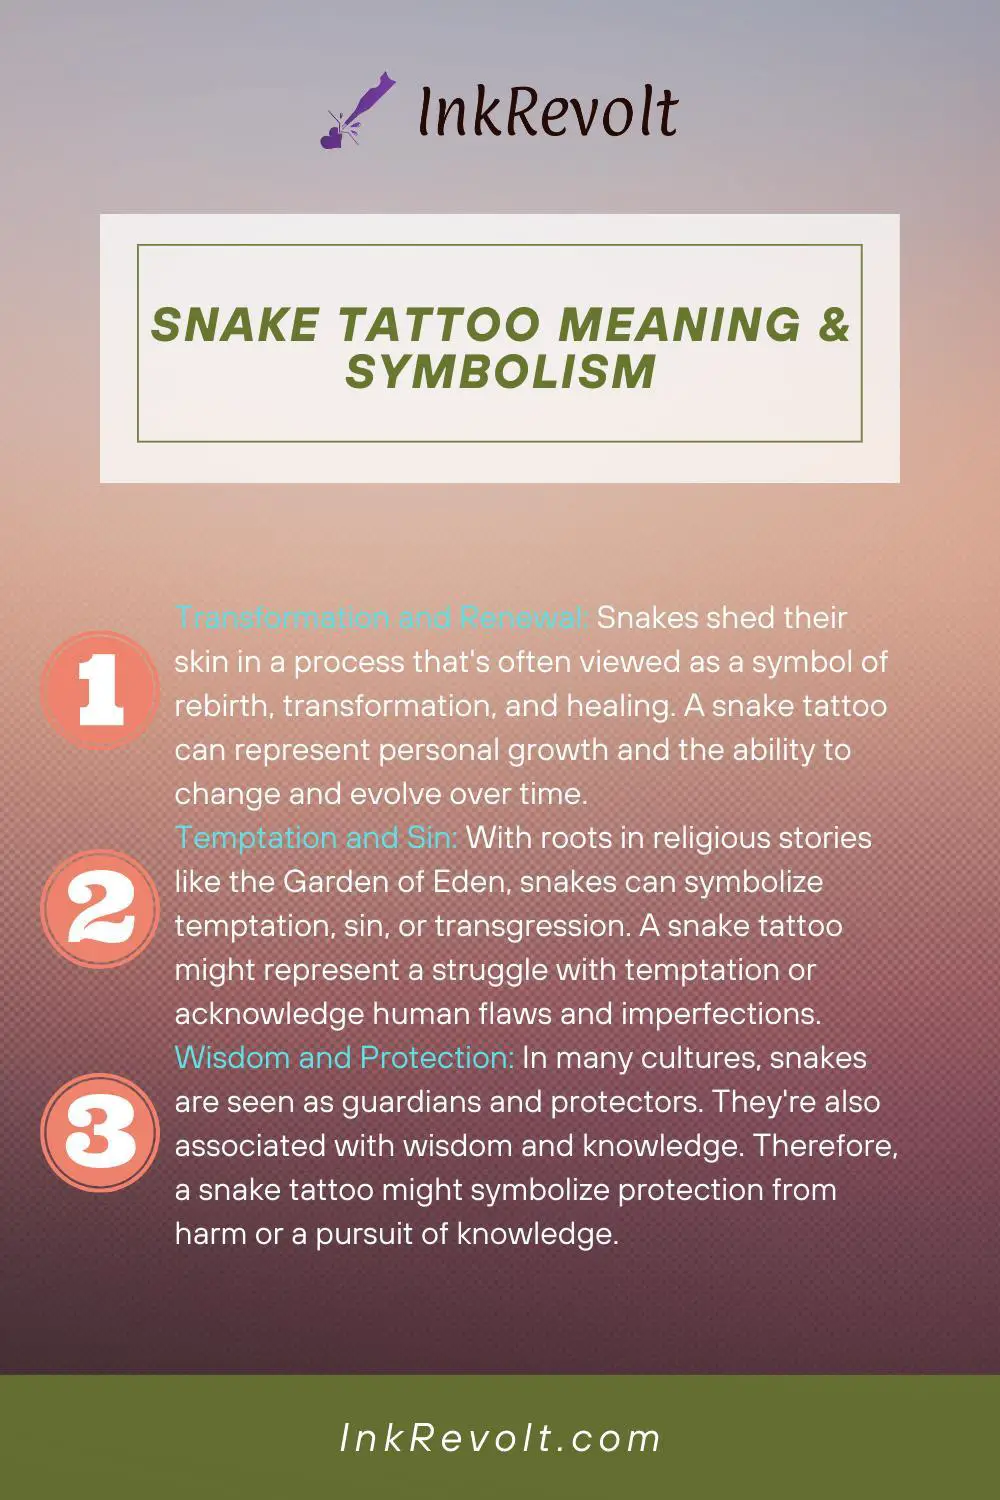 Snake Tattoo symbolism